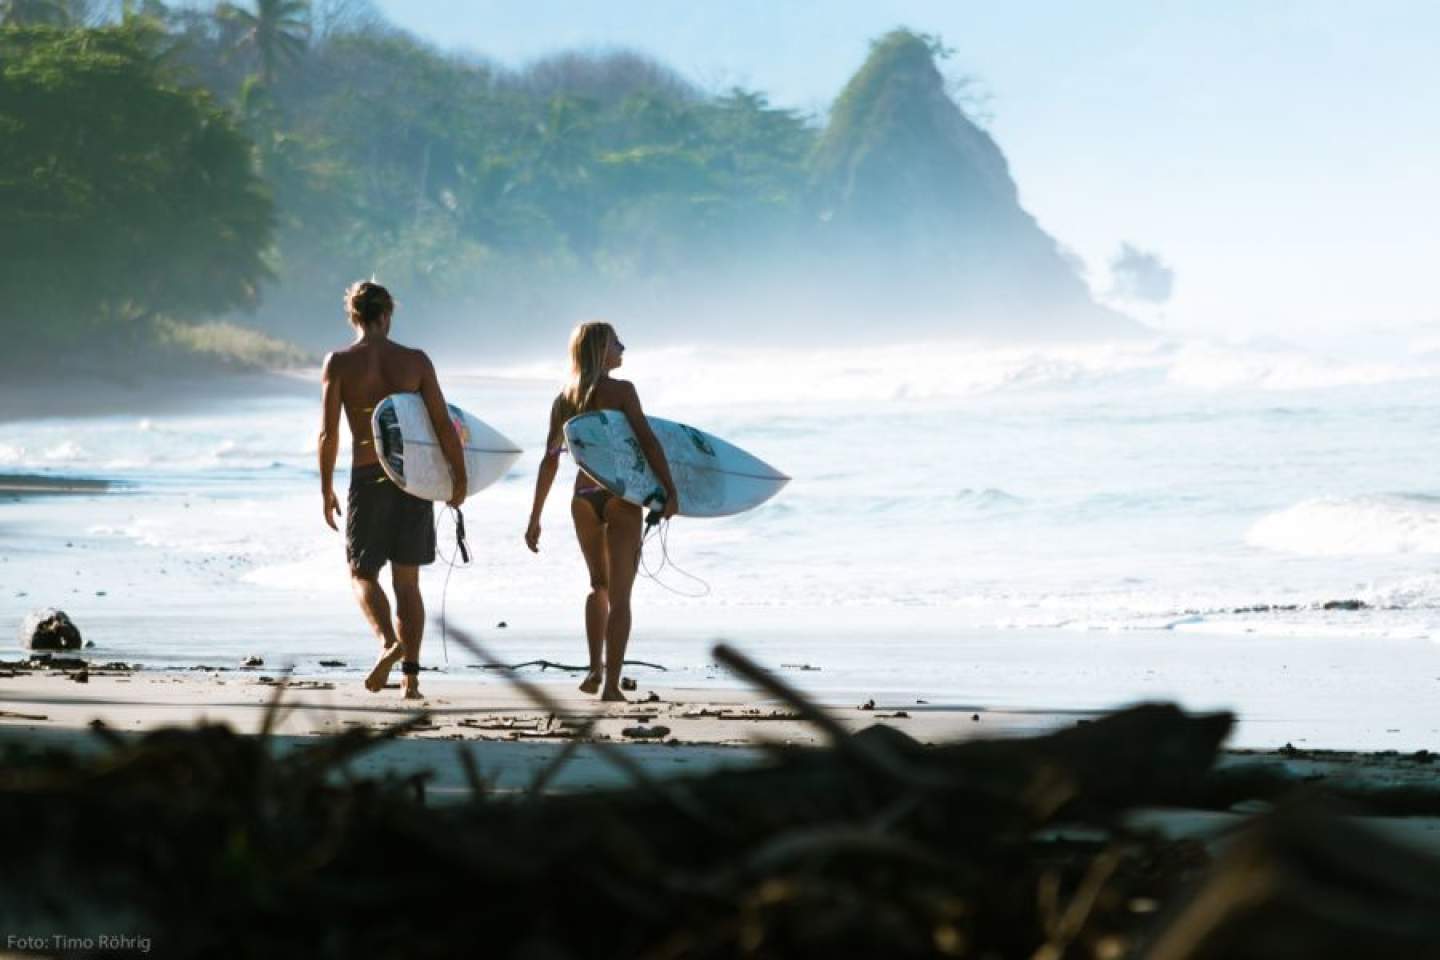 Intermediate surf — Ocean Tours Costa Rica